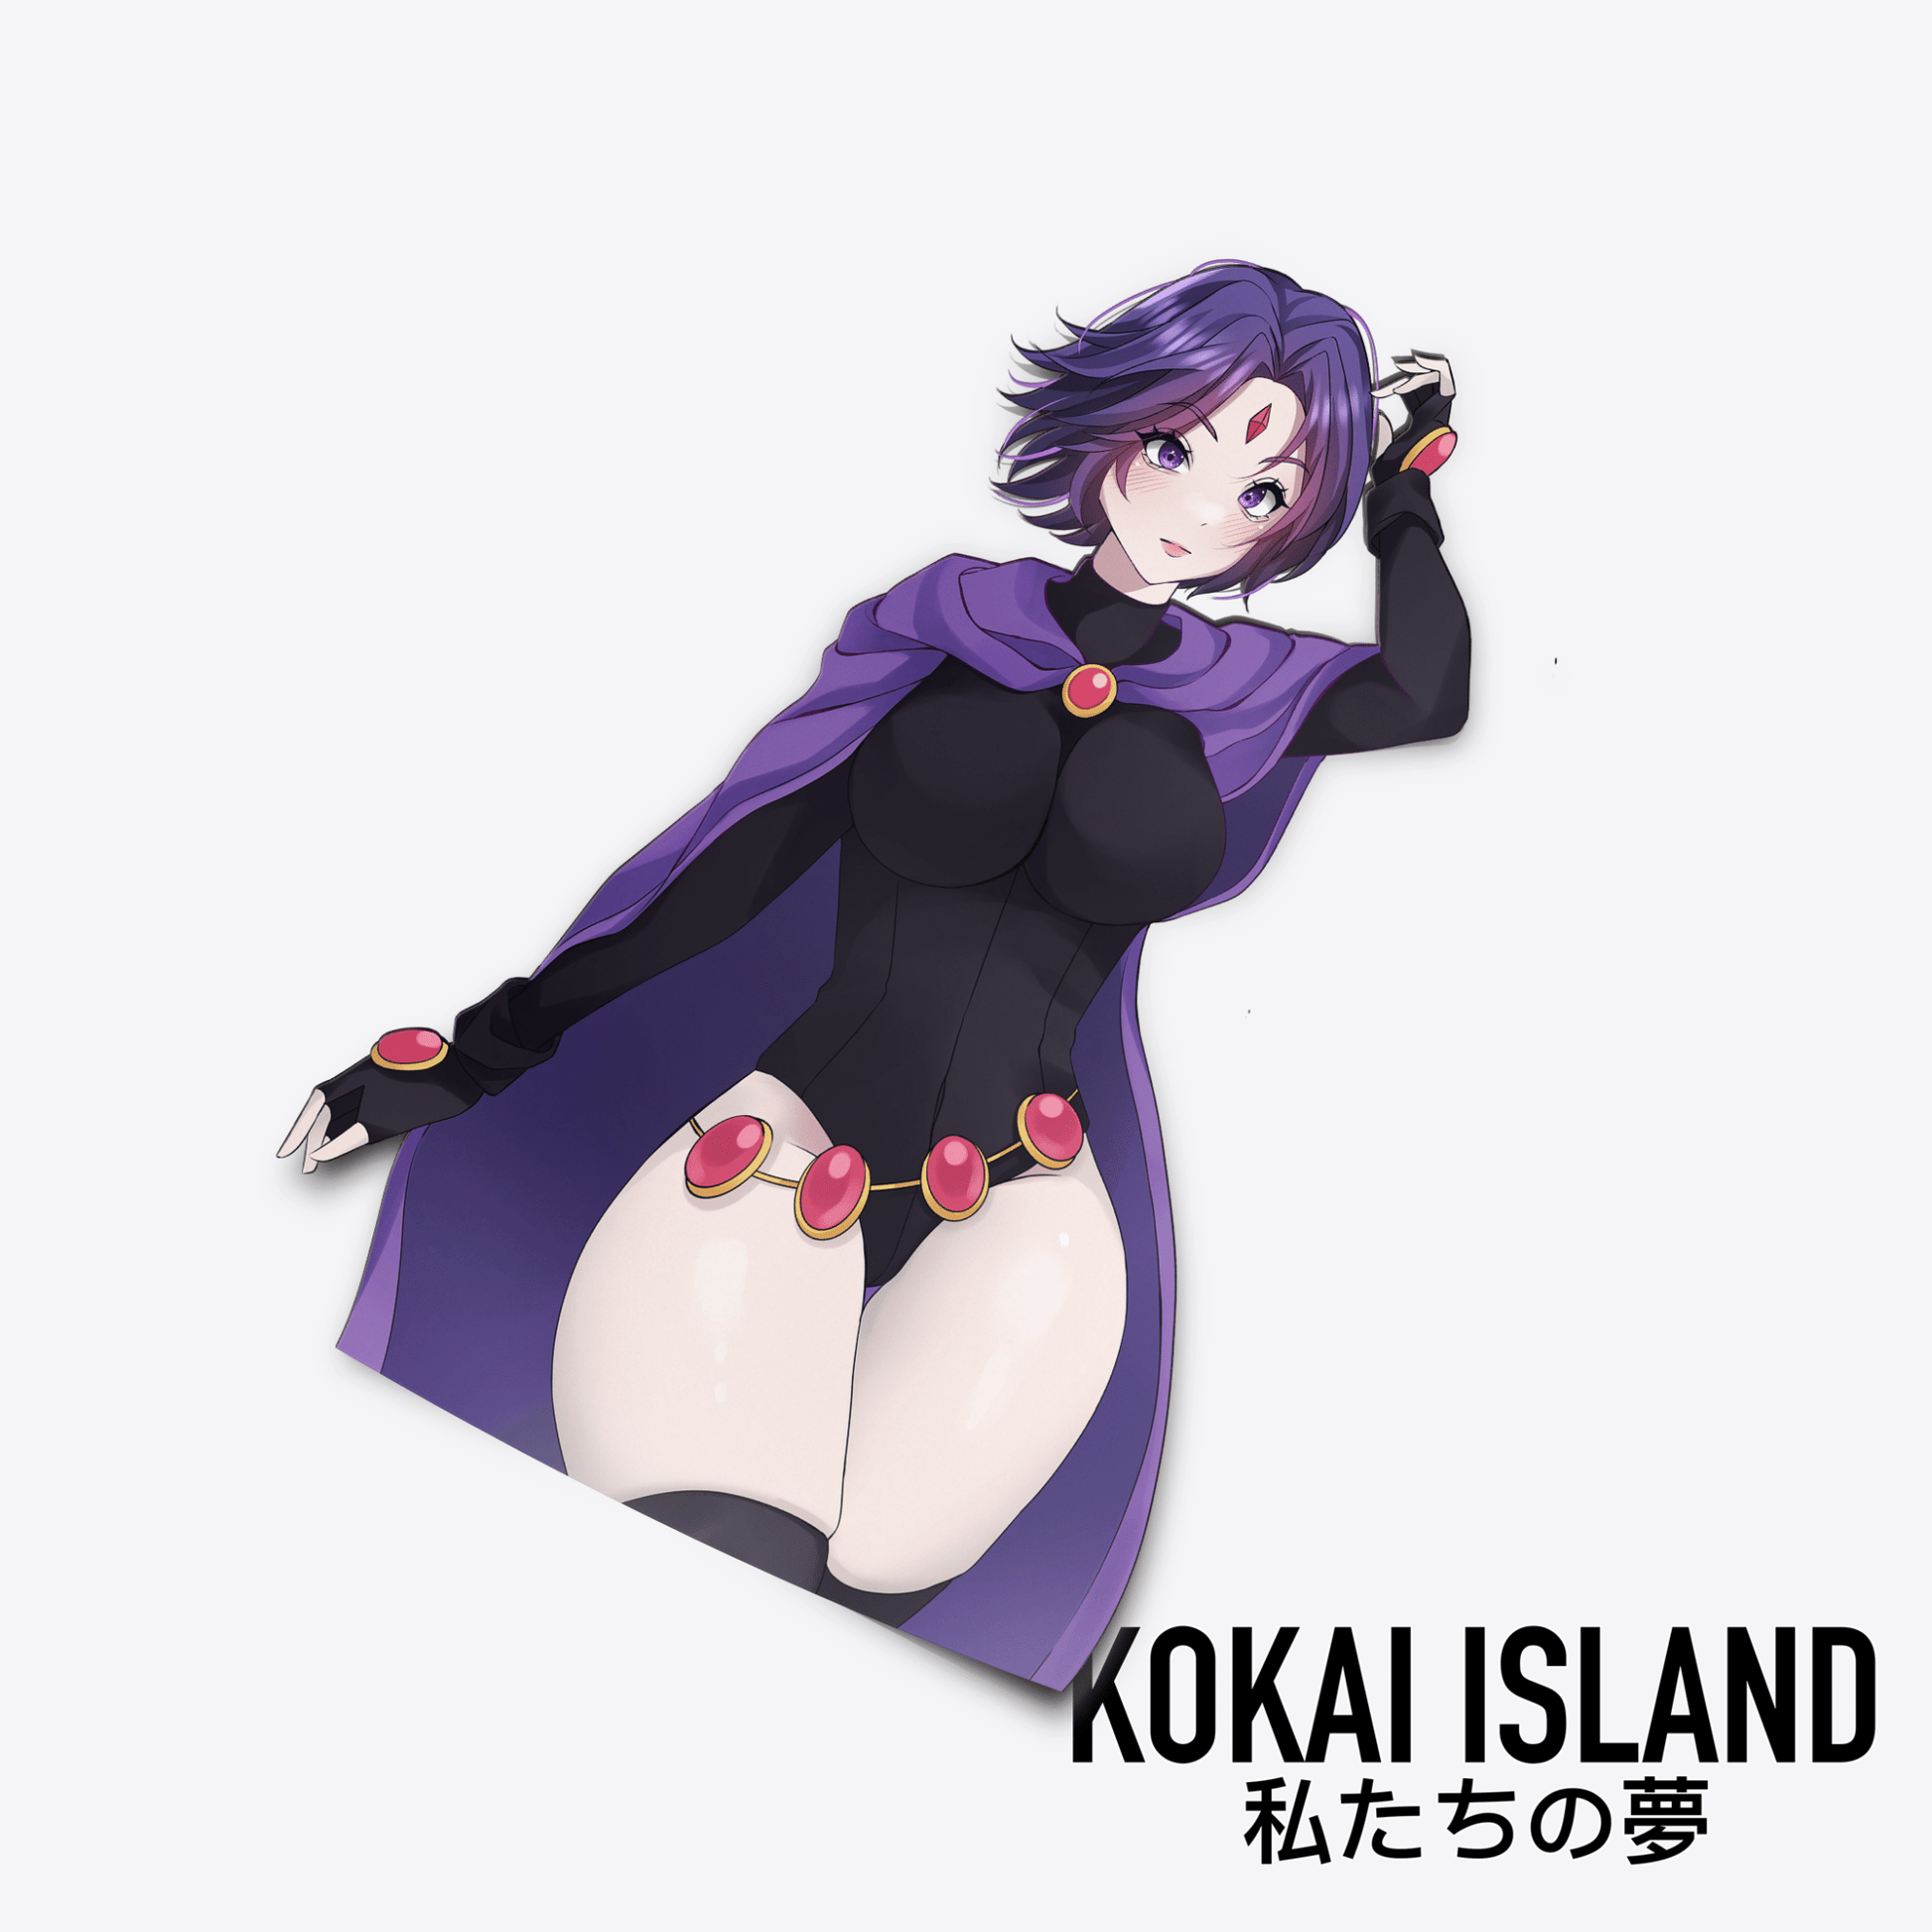 Raven DecalDecalKokai Island